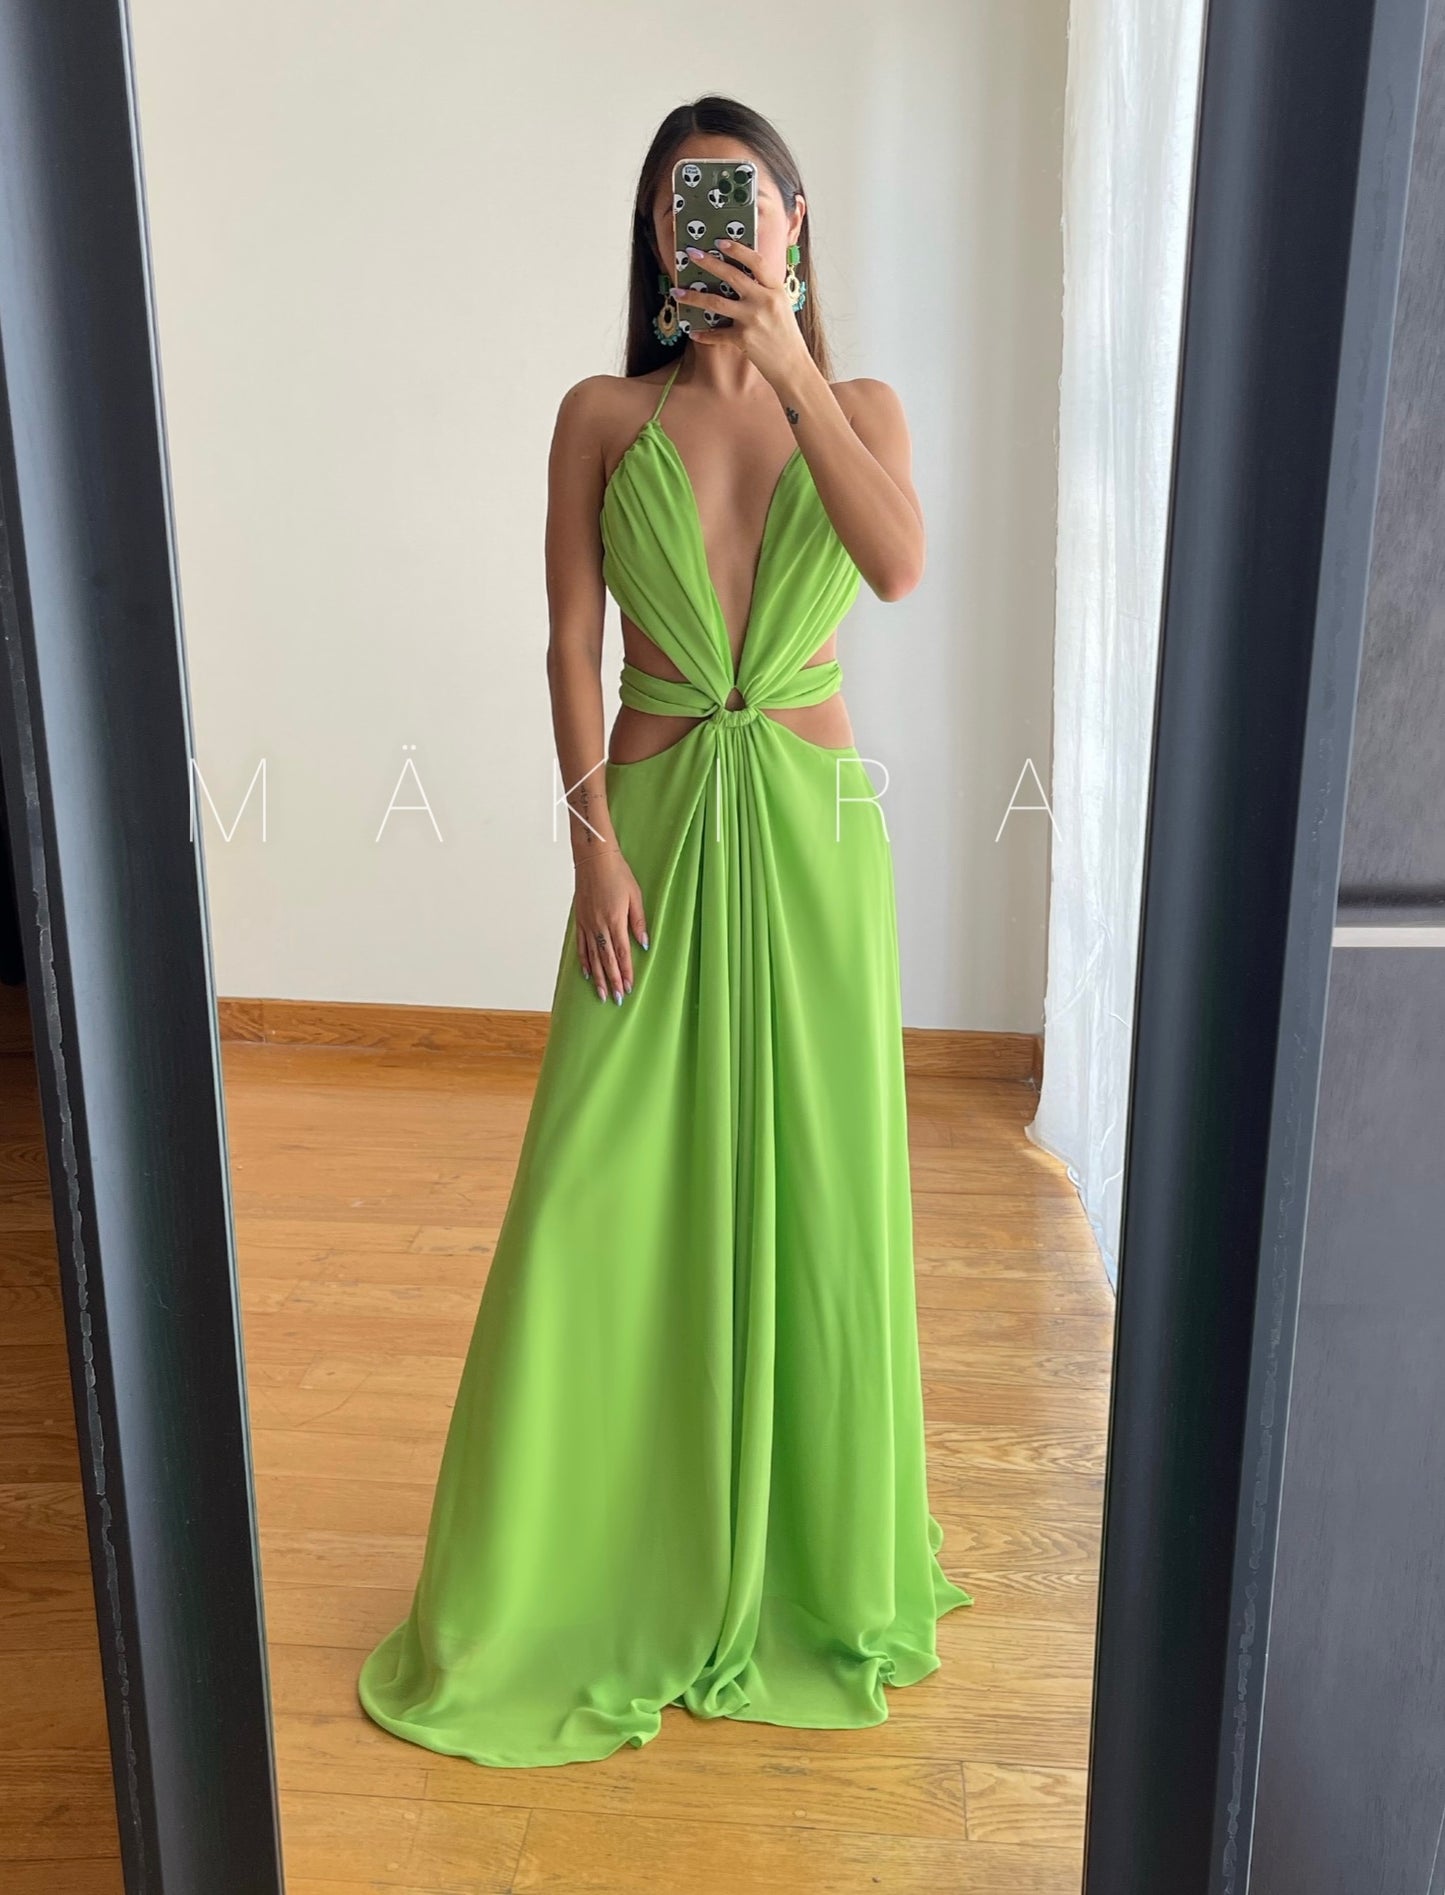 Bruna Green Tropical Dress